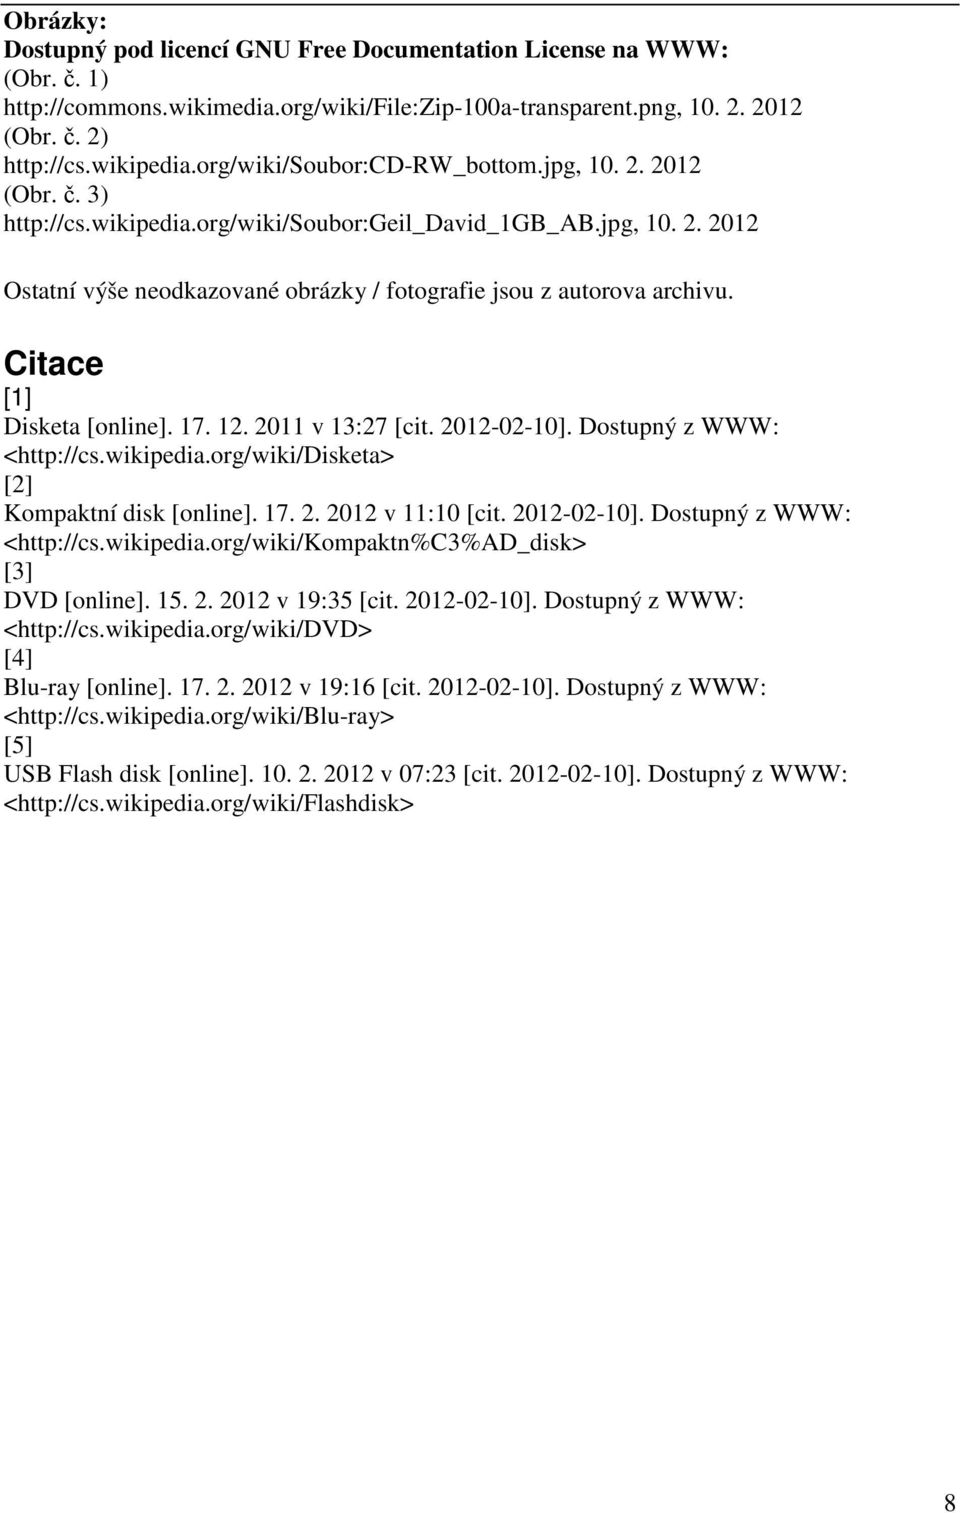 Citace [1] Disketa [online]. 17. 12. 2011 v 13:27 [cit. 2012-02-10]. Dostupný z WWW: <http://cs.wikipedia.org/wiki/disketa> [2] Kompaktní disk [online]. 17. 2. 2012 v 11:10 [cit. 2012-02-10]. Dostupný z WWW: <http://cs.wikipedia.org/wiki/kompaktn%c3%ad_disk> [3] DVD [online].